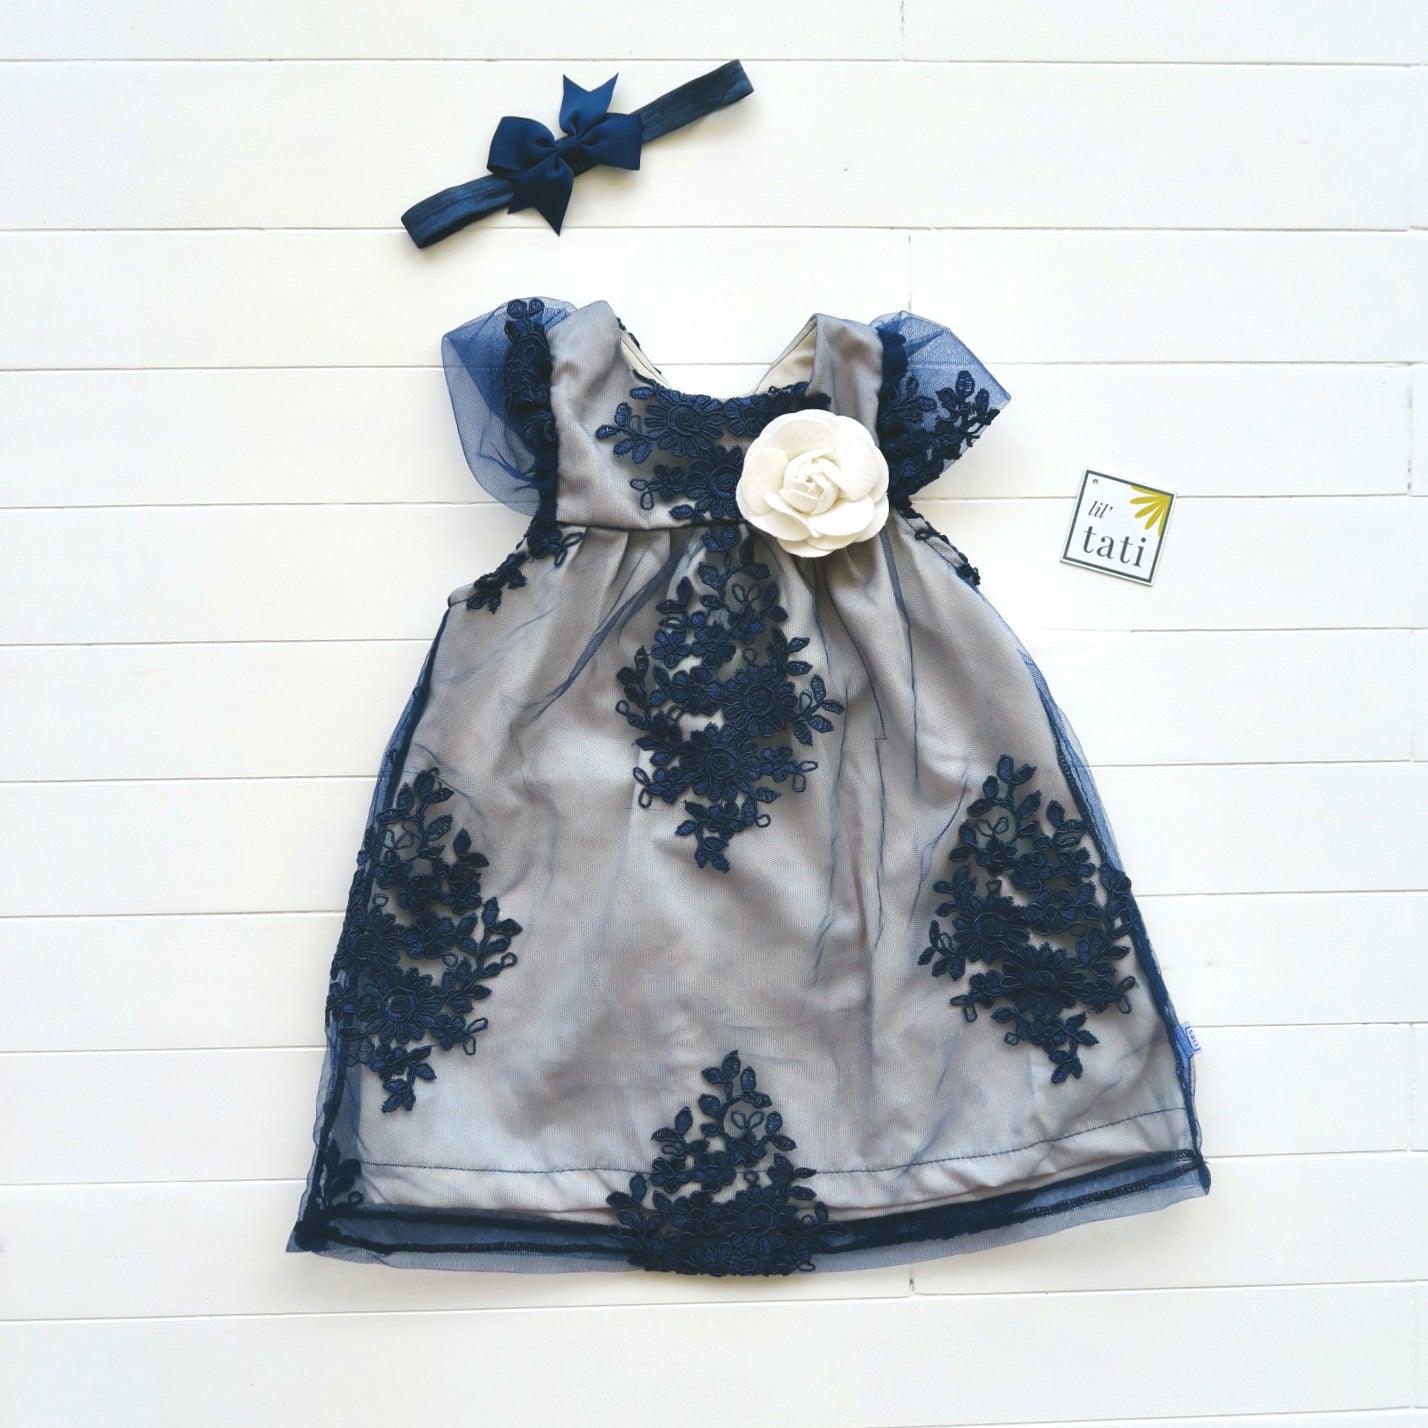 Magnolia Dress in Fancy Blue Tulle Embroidery - Lil' Tati